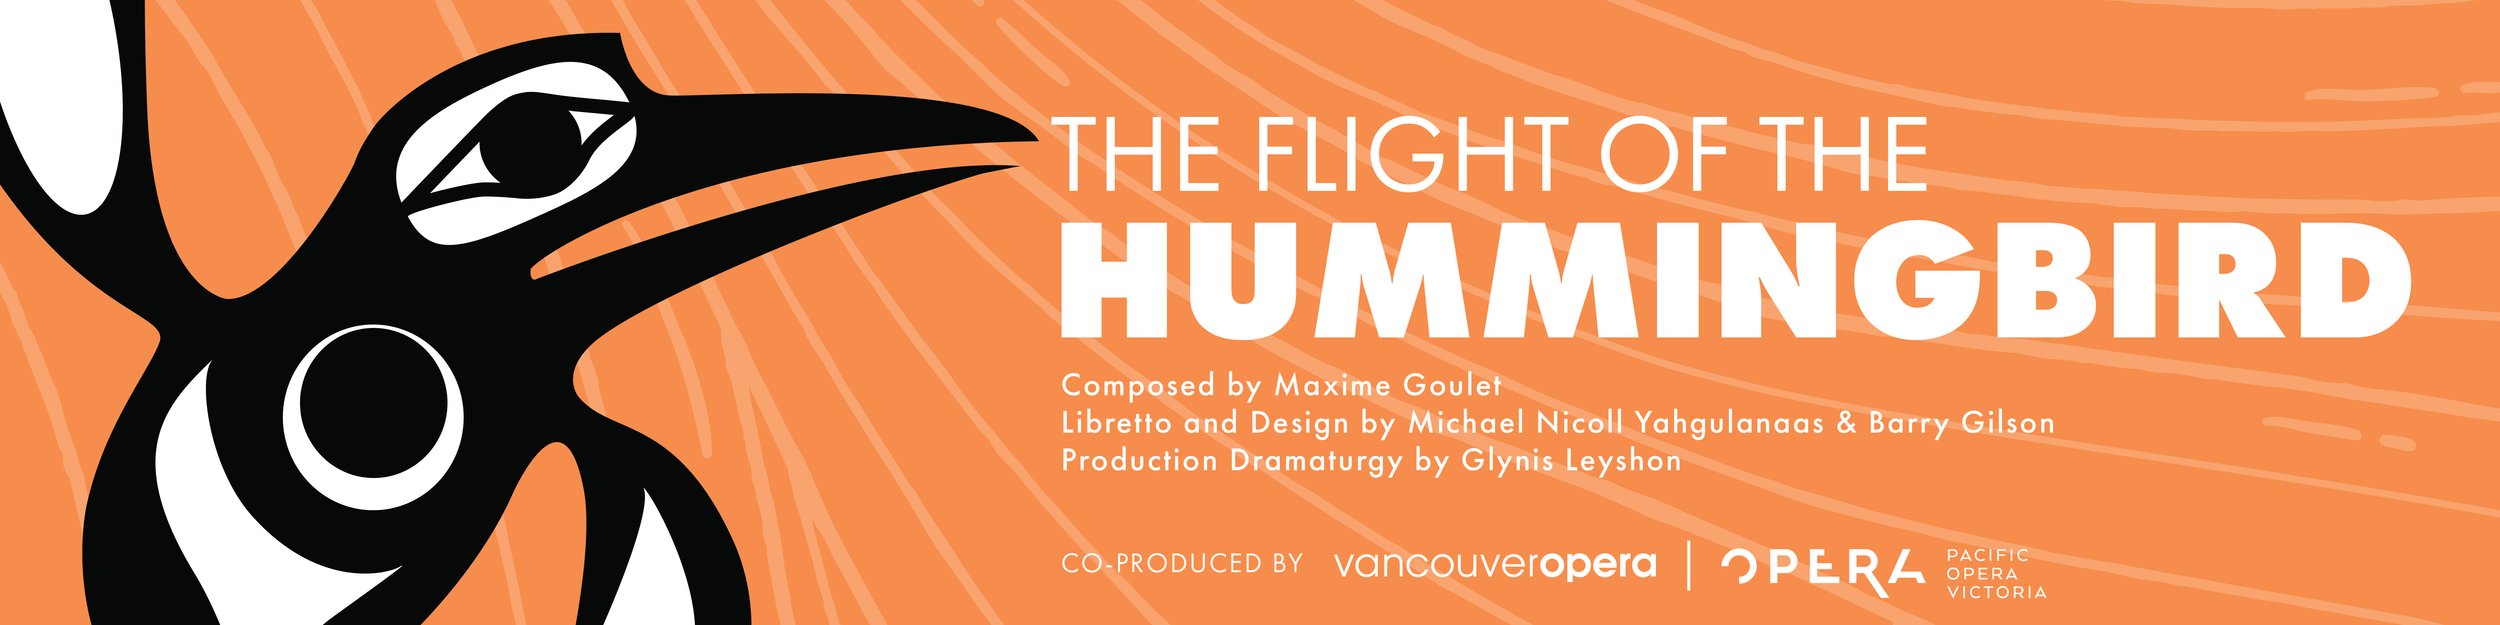 Hummingbird+1080+Graphic-Orange-Text